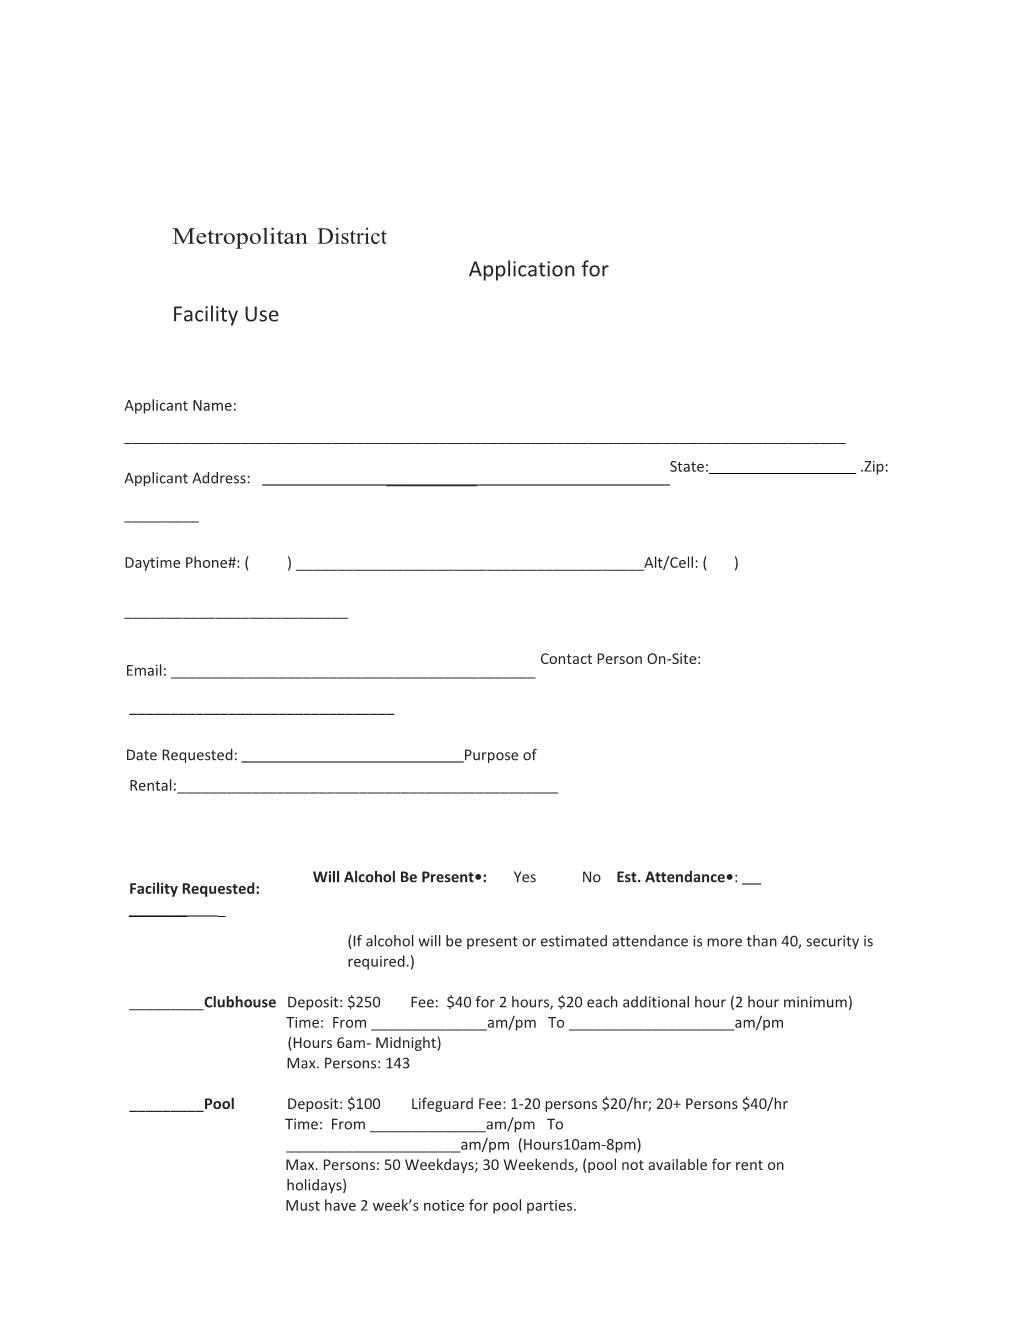 Metropolitan District Application for Facility Use